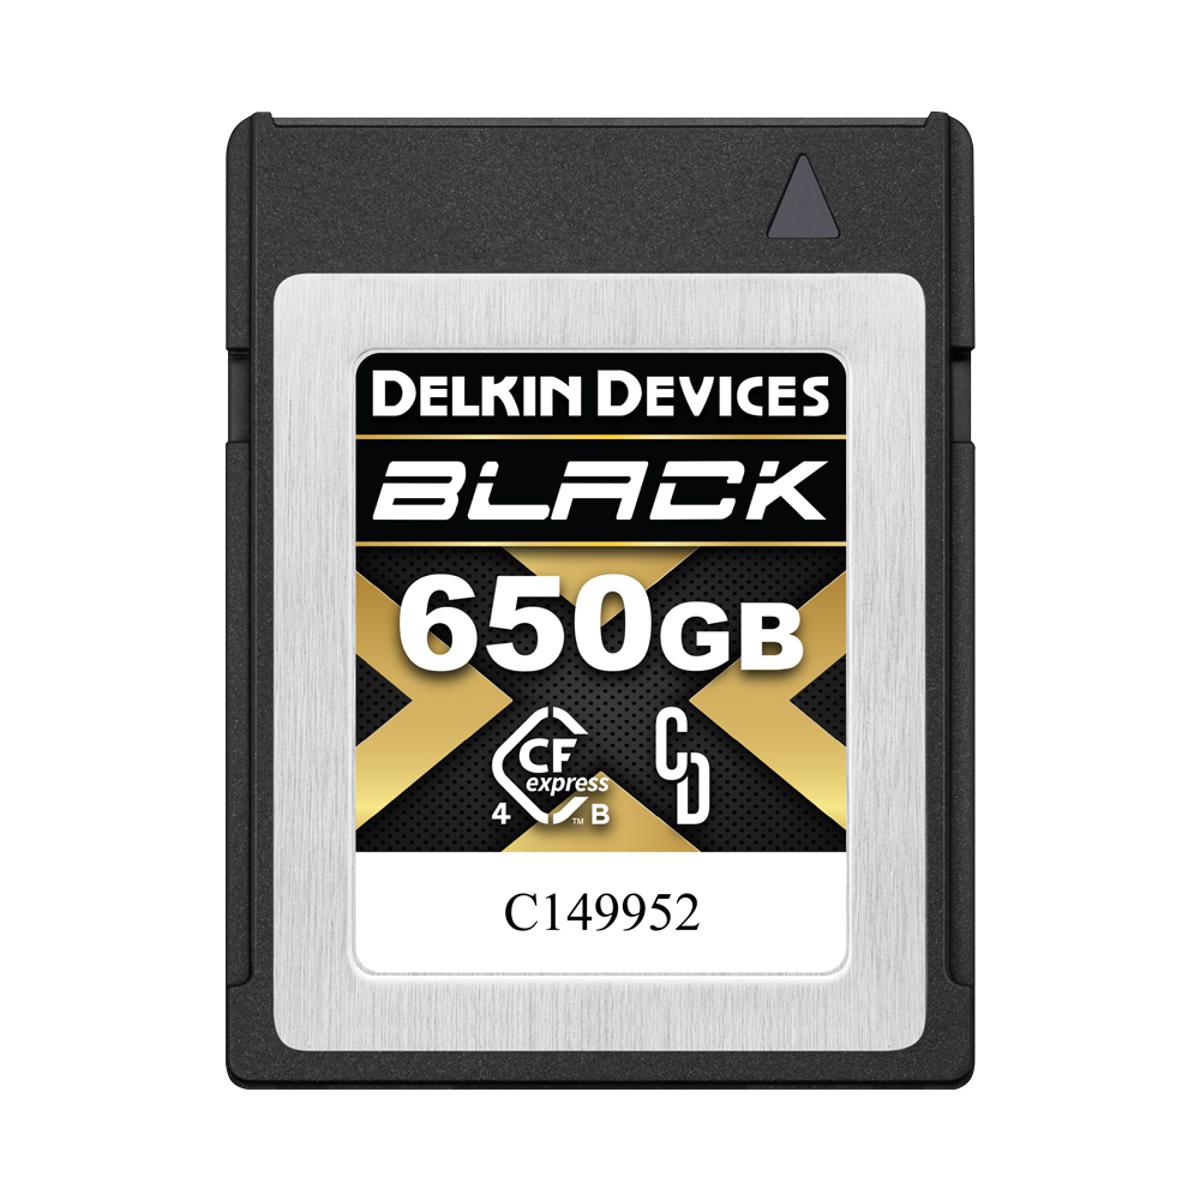 Delkin BLACK 650GB 4.0 CFexpress Type B Memory Card